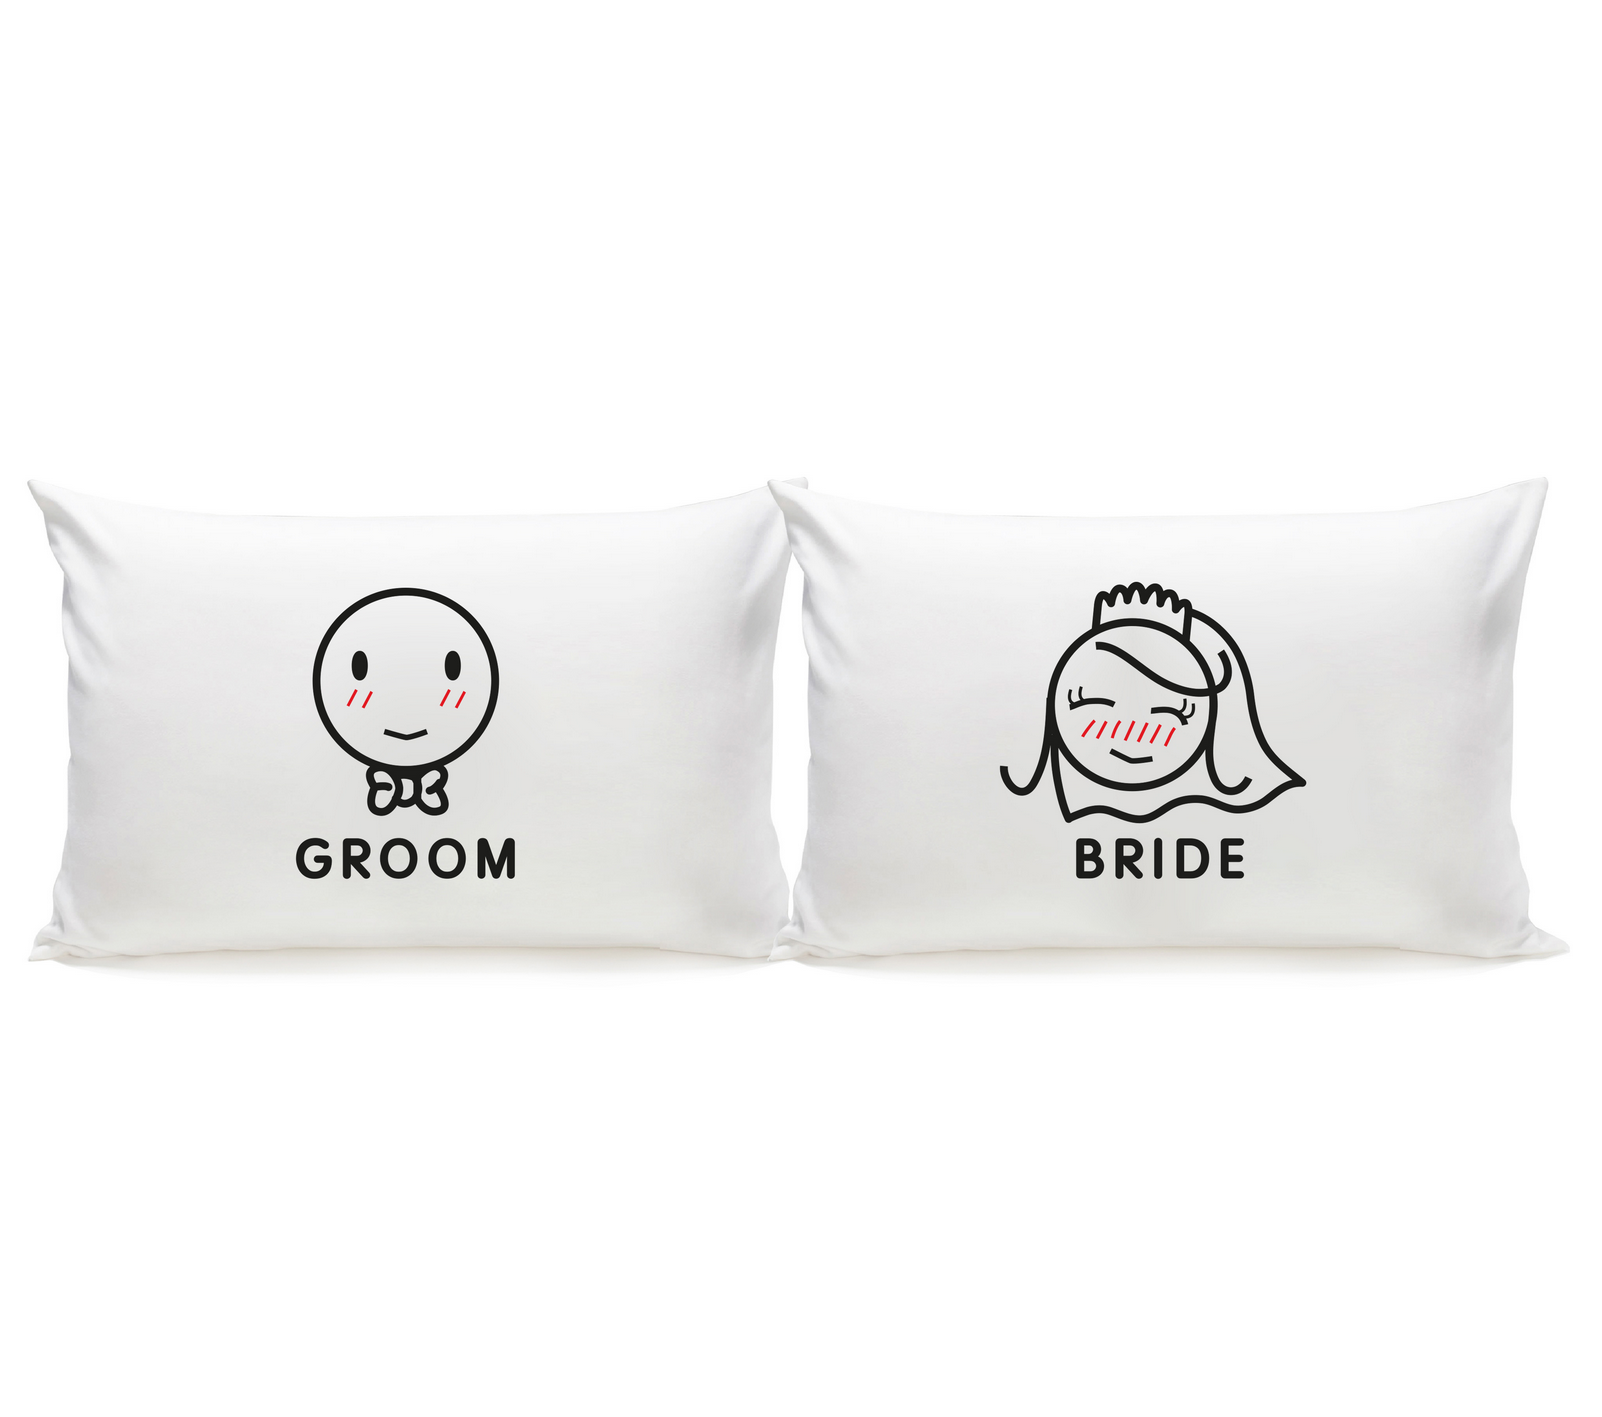 Human Touch - "新婚夫婦" 情侶枕頭套 "Bride & Groom" Set / 2 Couple Pillow Case (3HT04-164)